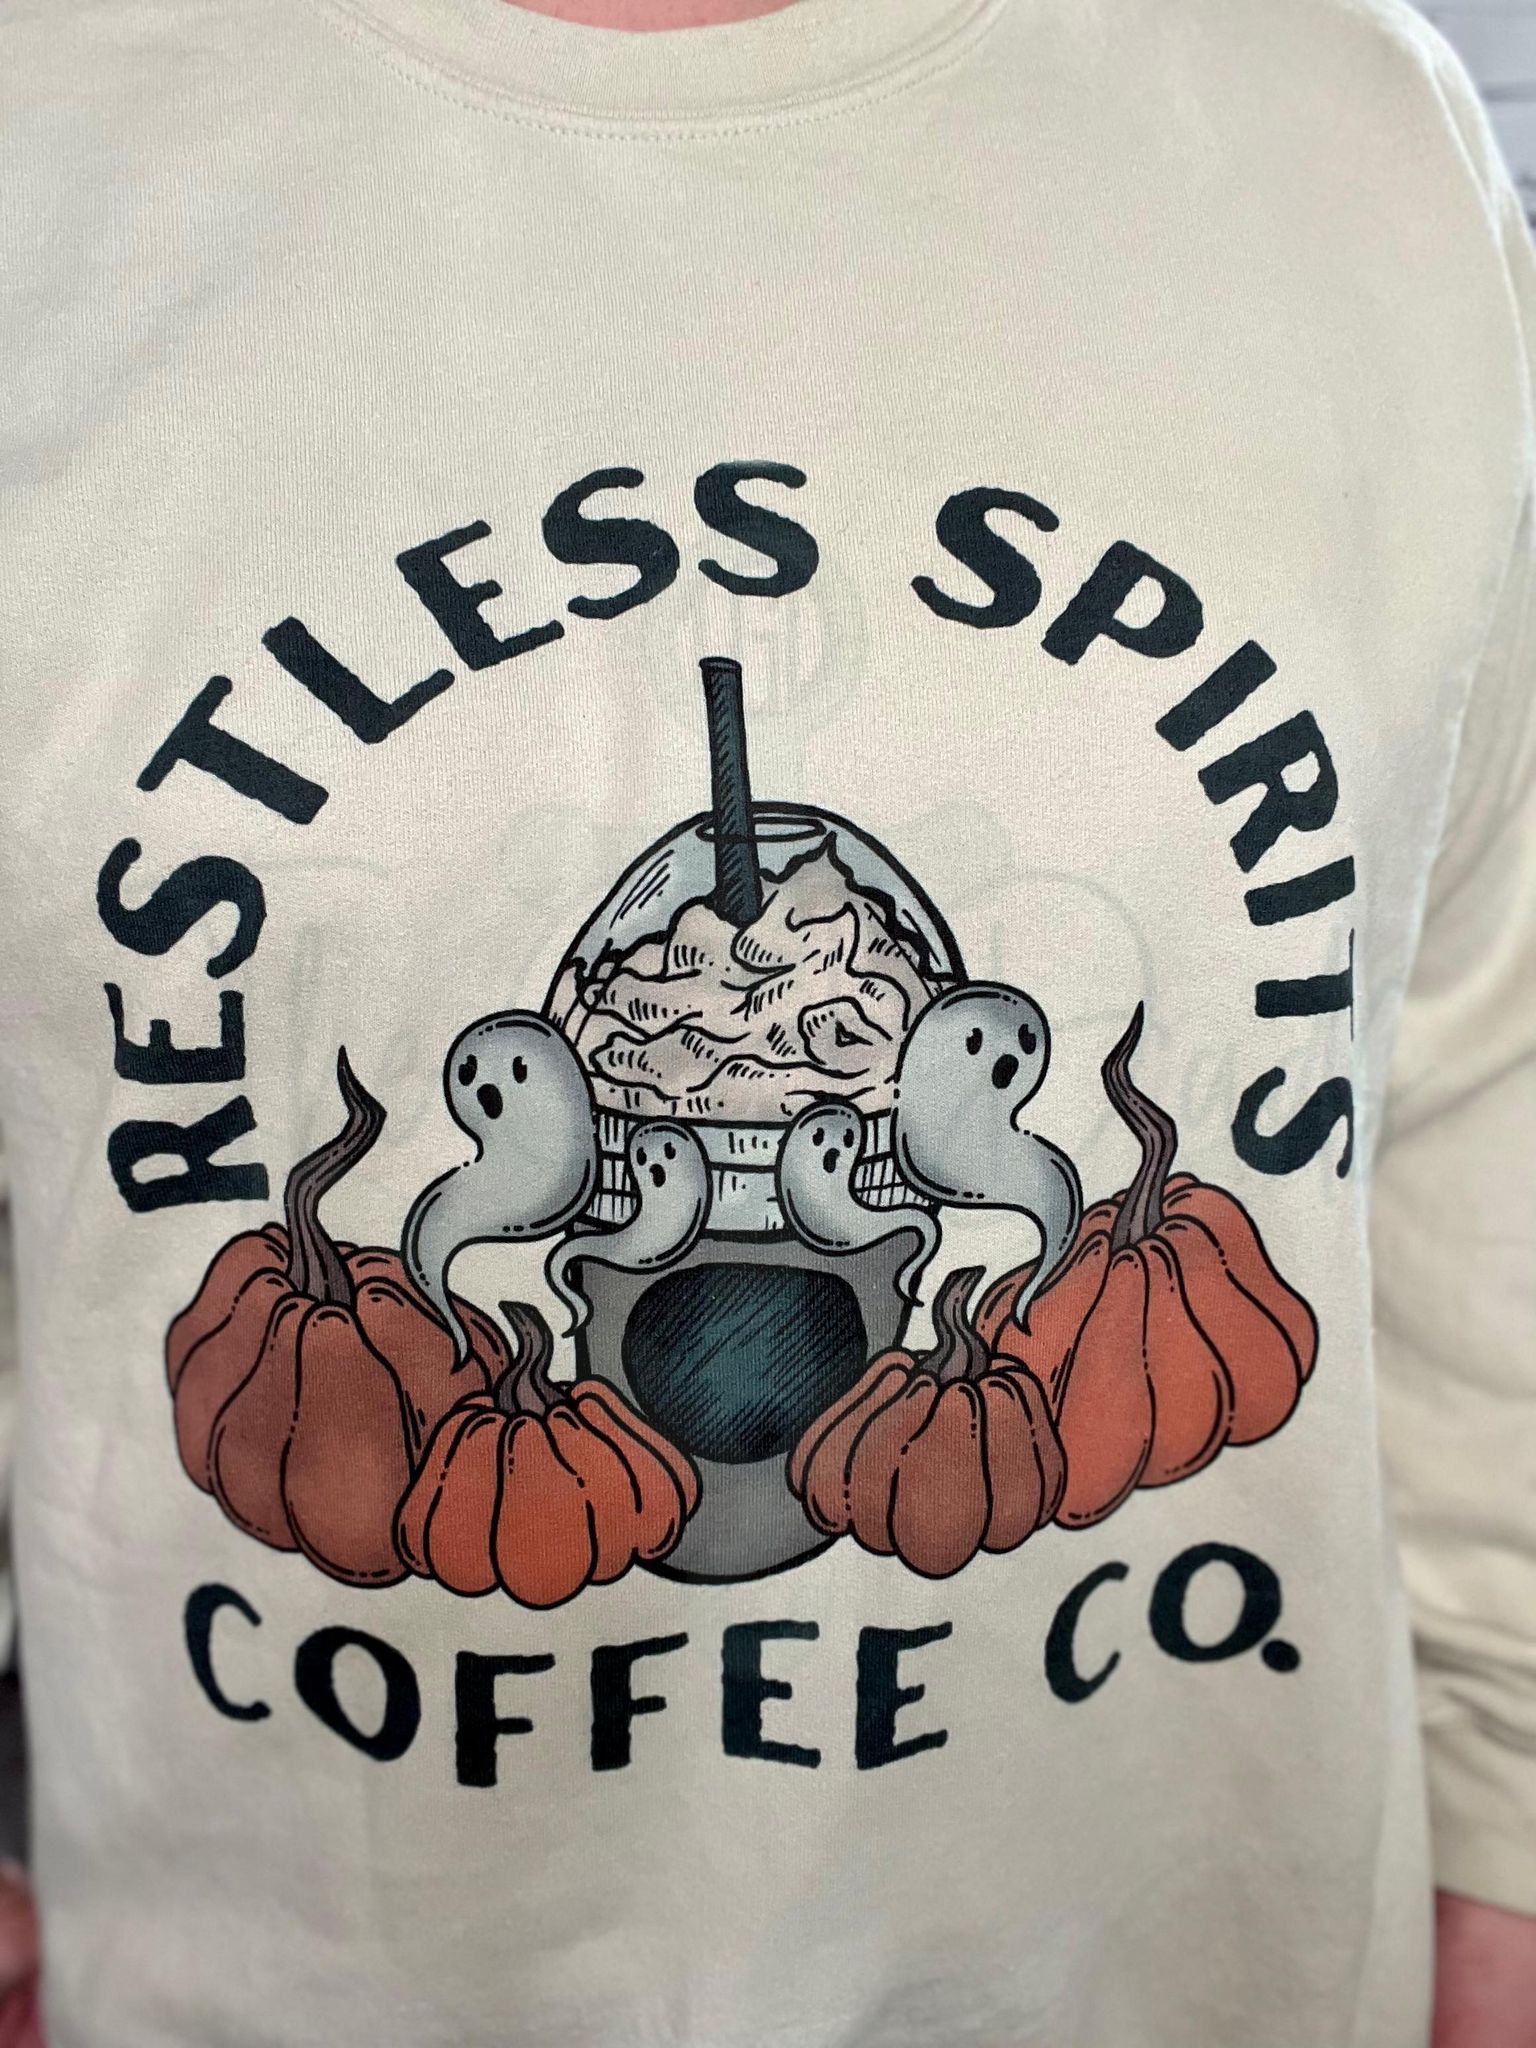 Restless Spirits Coffee Co.  Top Design